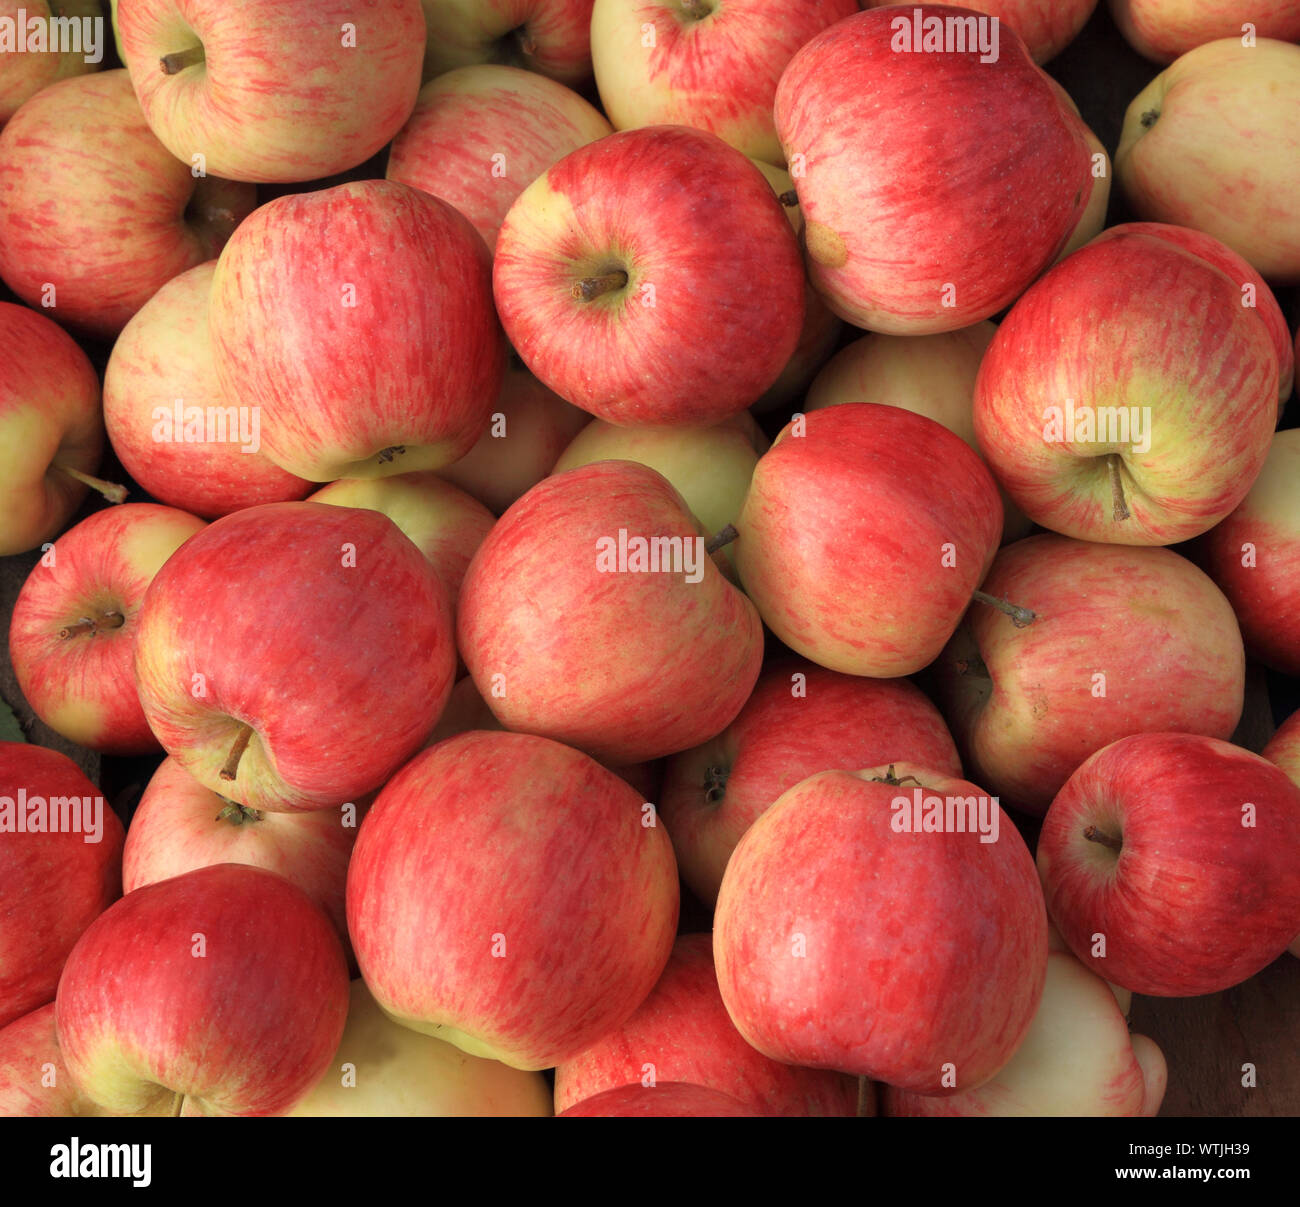 Apple uffolk Pink', Äpfel, Äpfel, gesunde Ernährung, Hofladen Anzeige Stockfoto